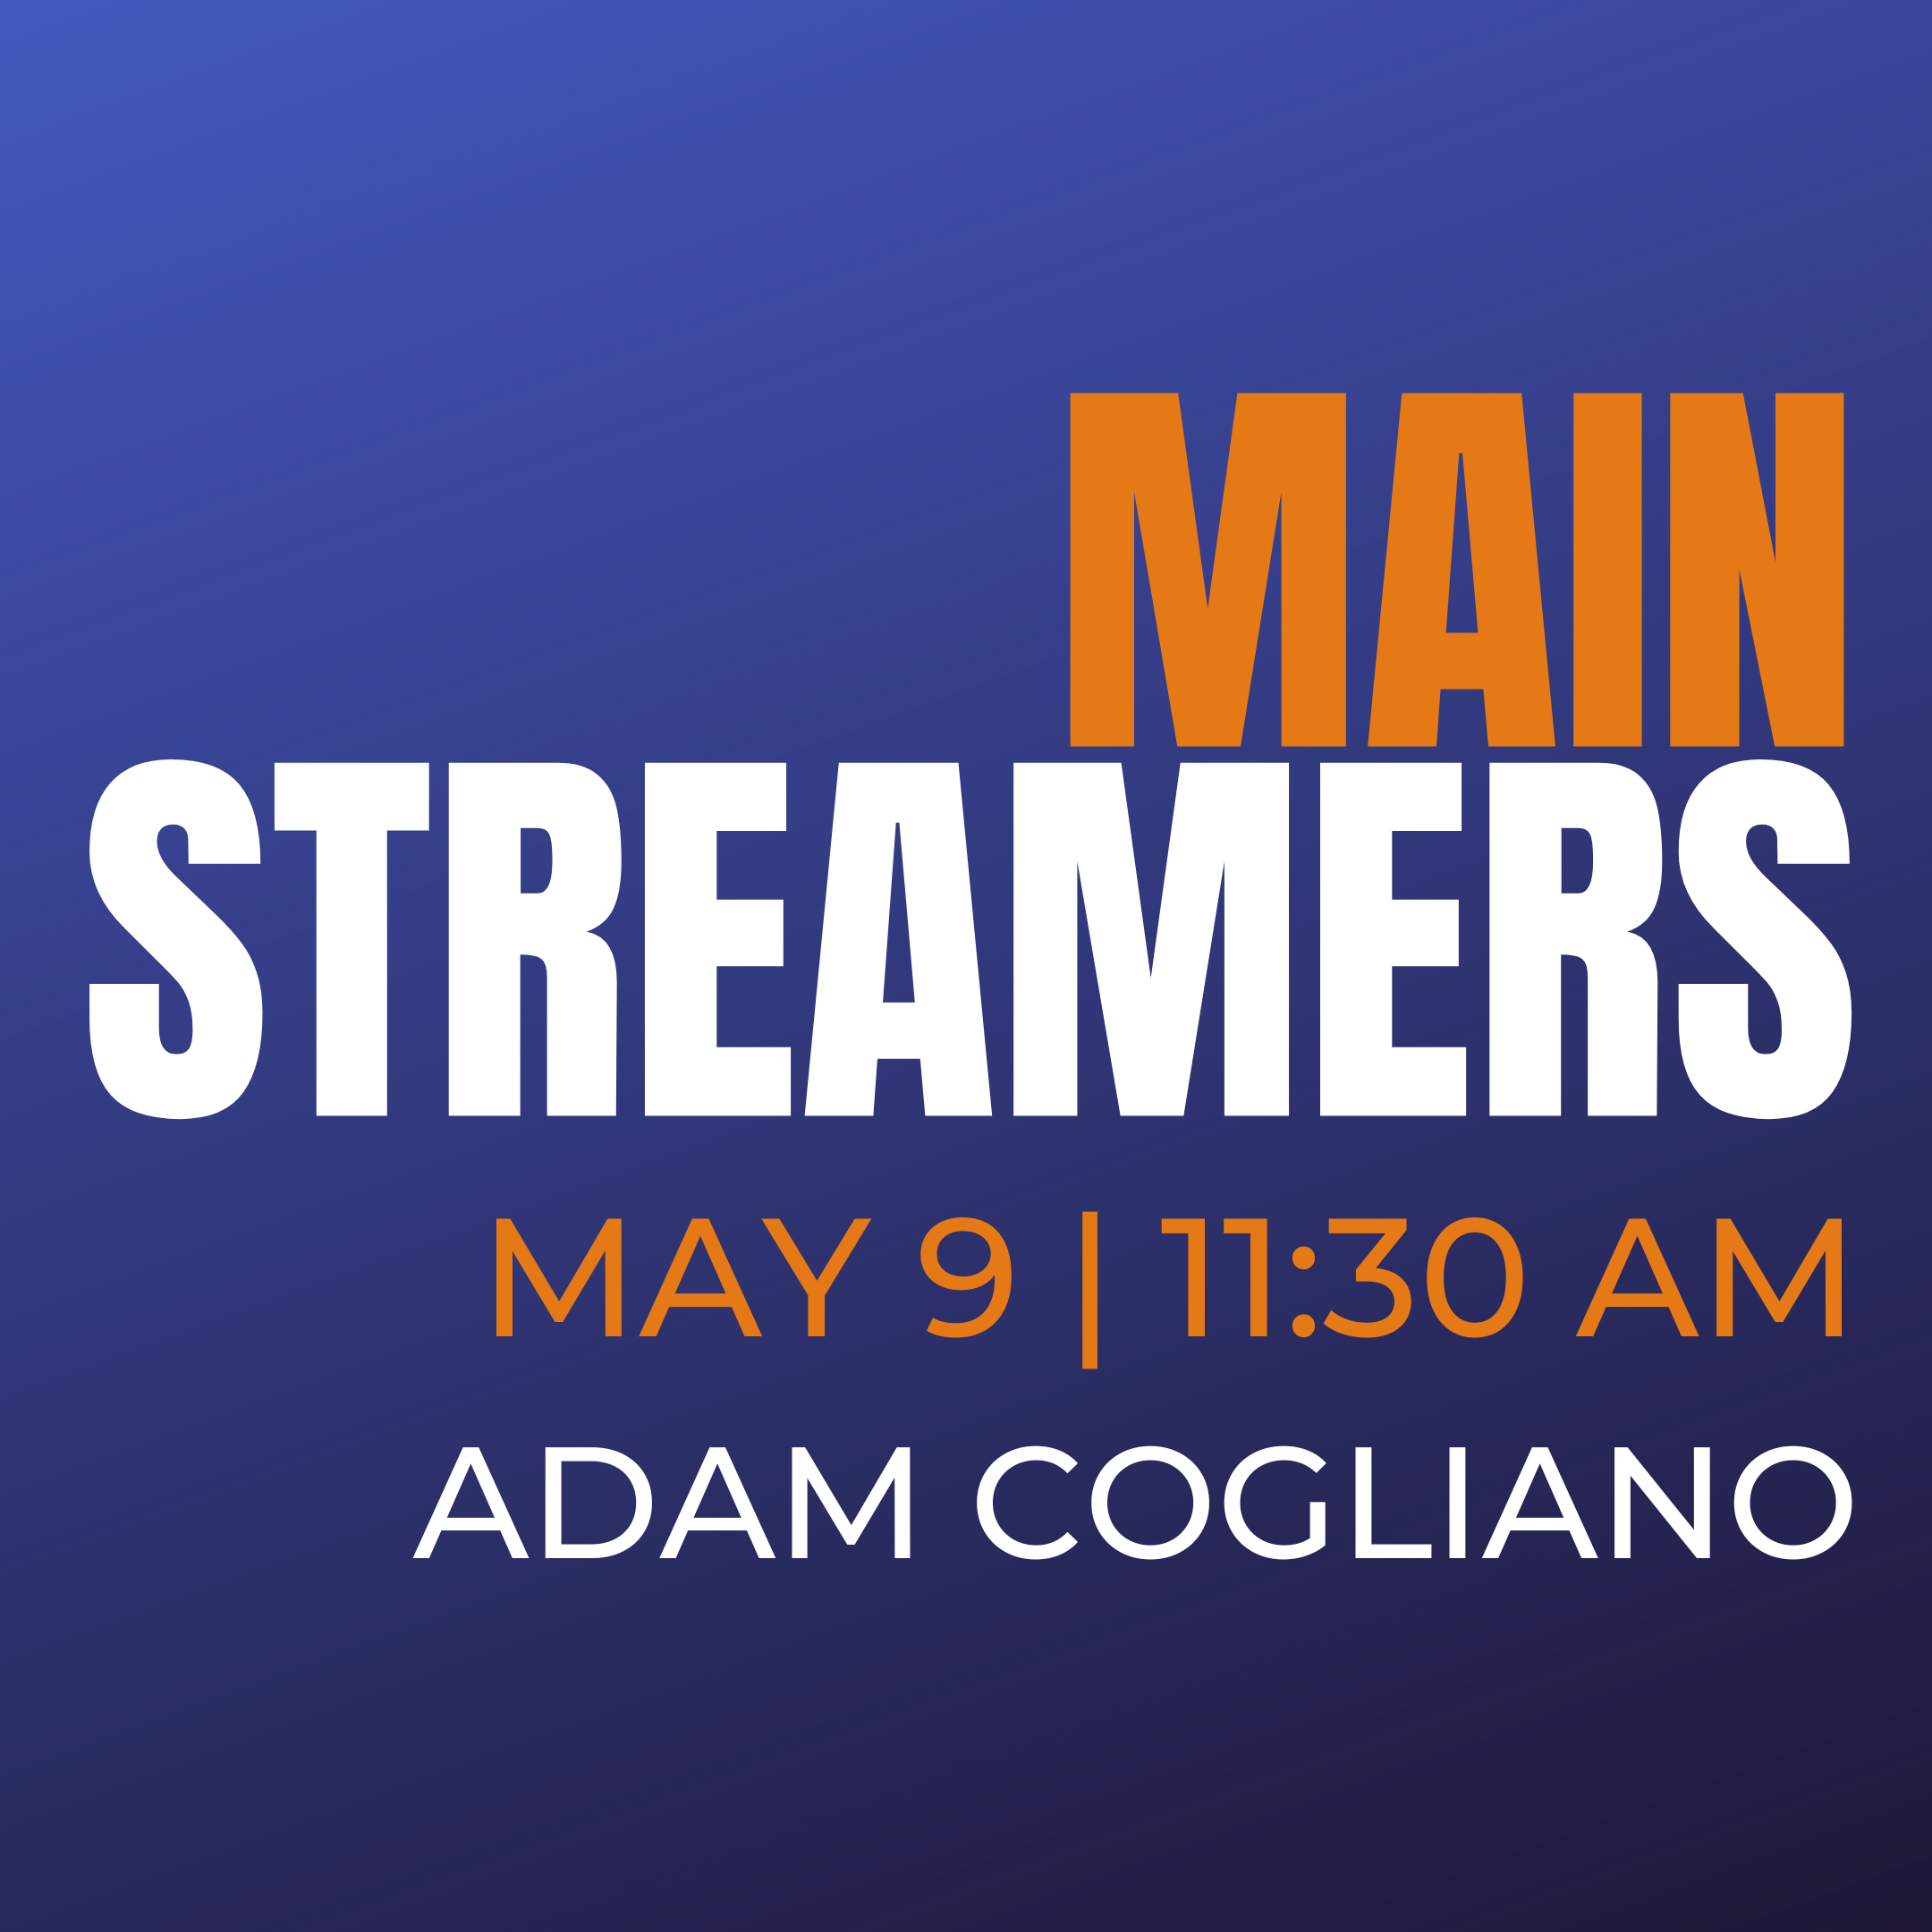 MainStreamers - Adam Cogliano